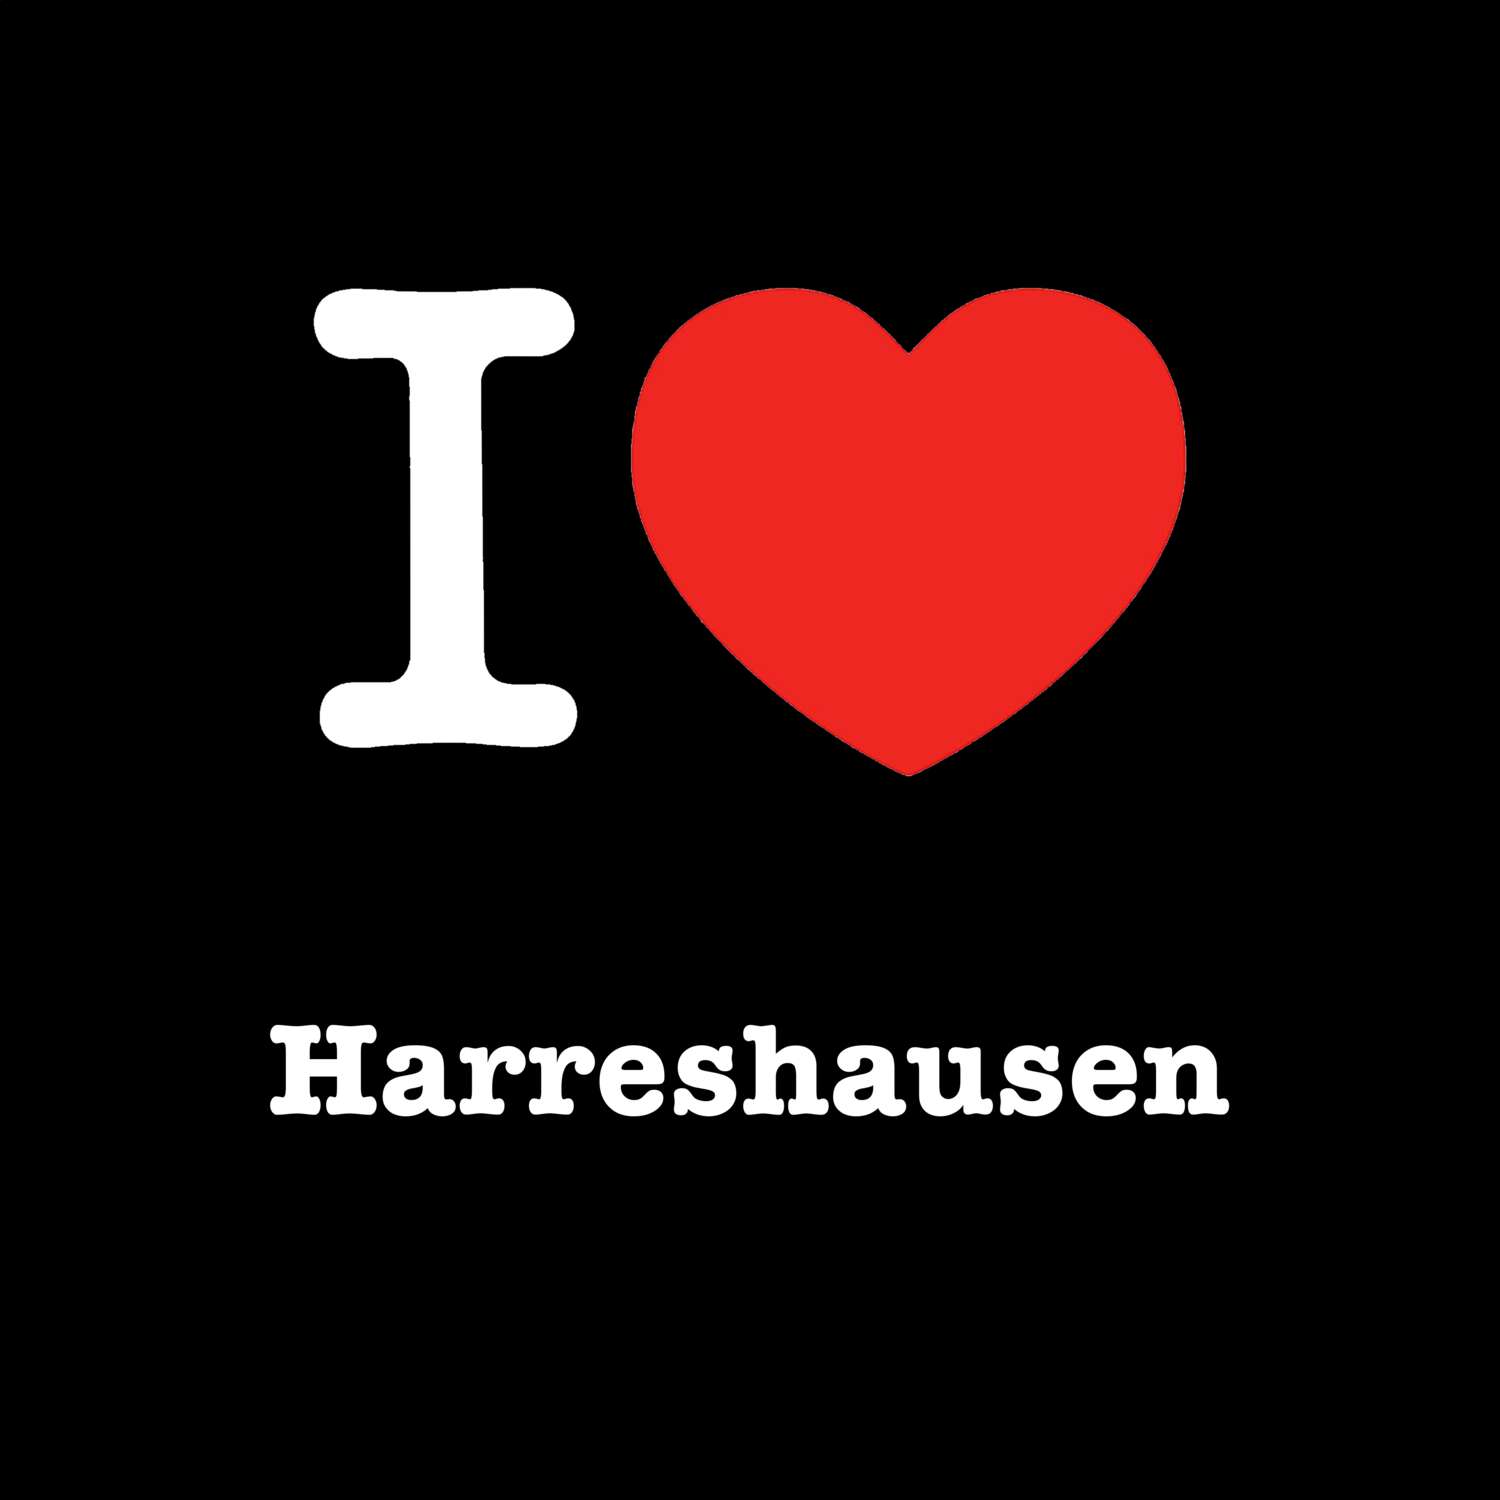 Harreshausen T-Shirt »I love«